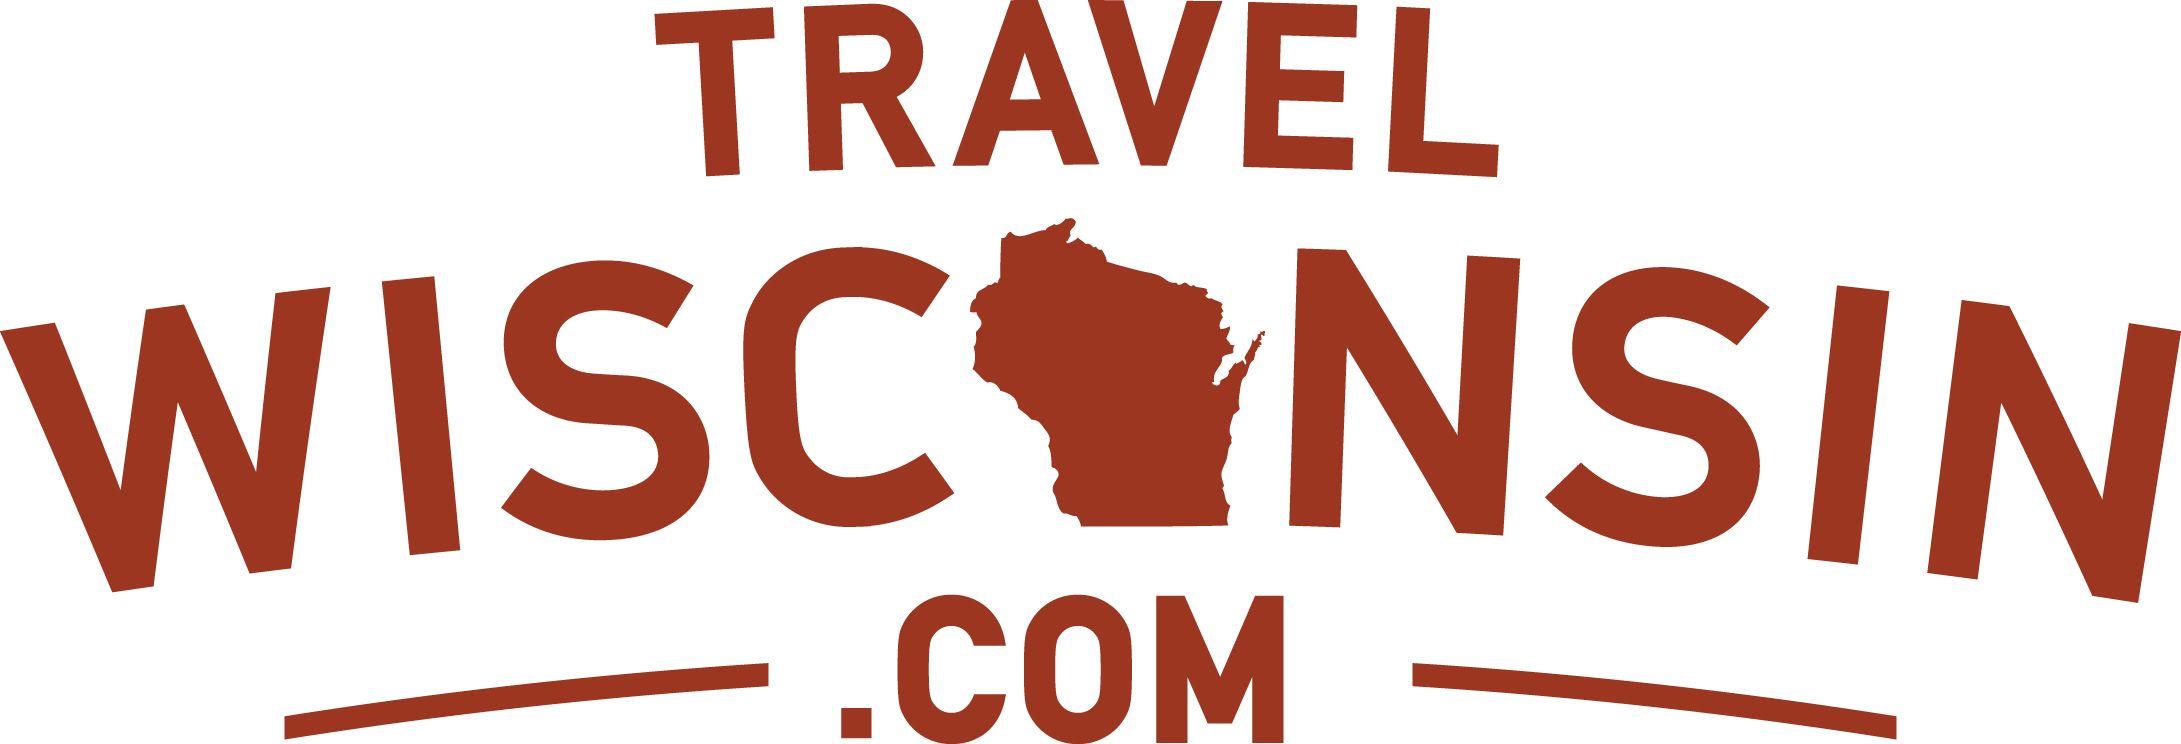 Wisconsin Logo - Travel Wisconsin Logo Files | Travel Wisconsin